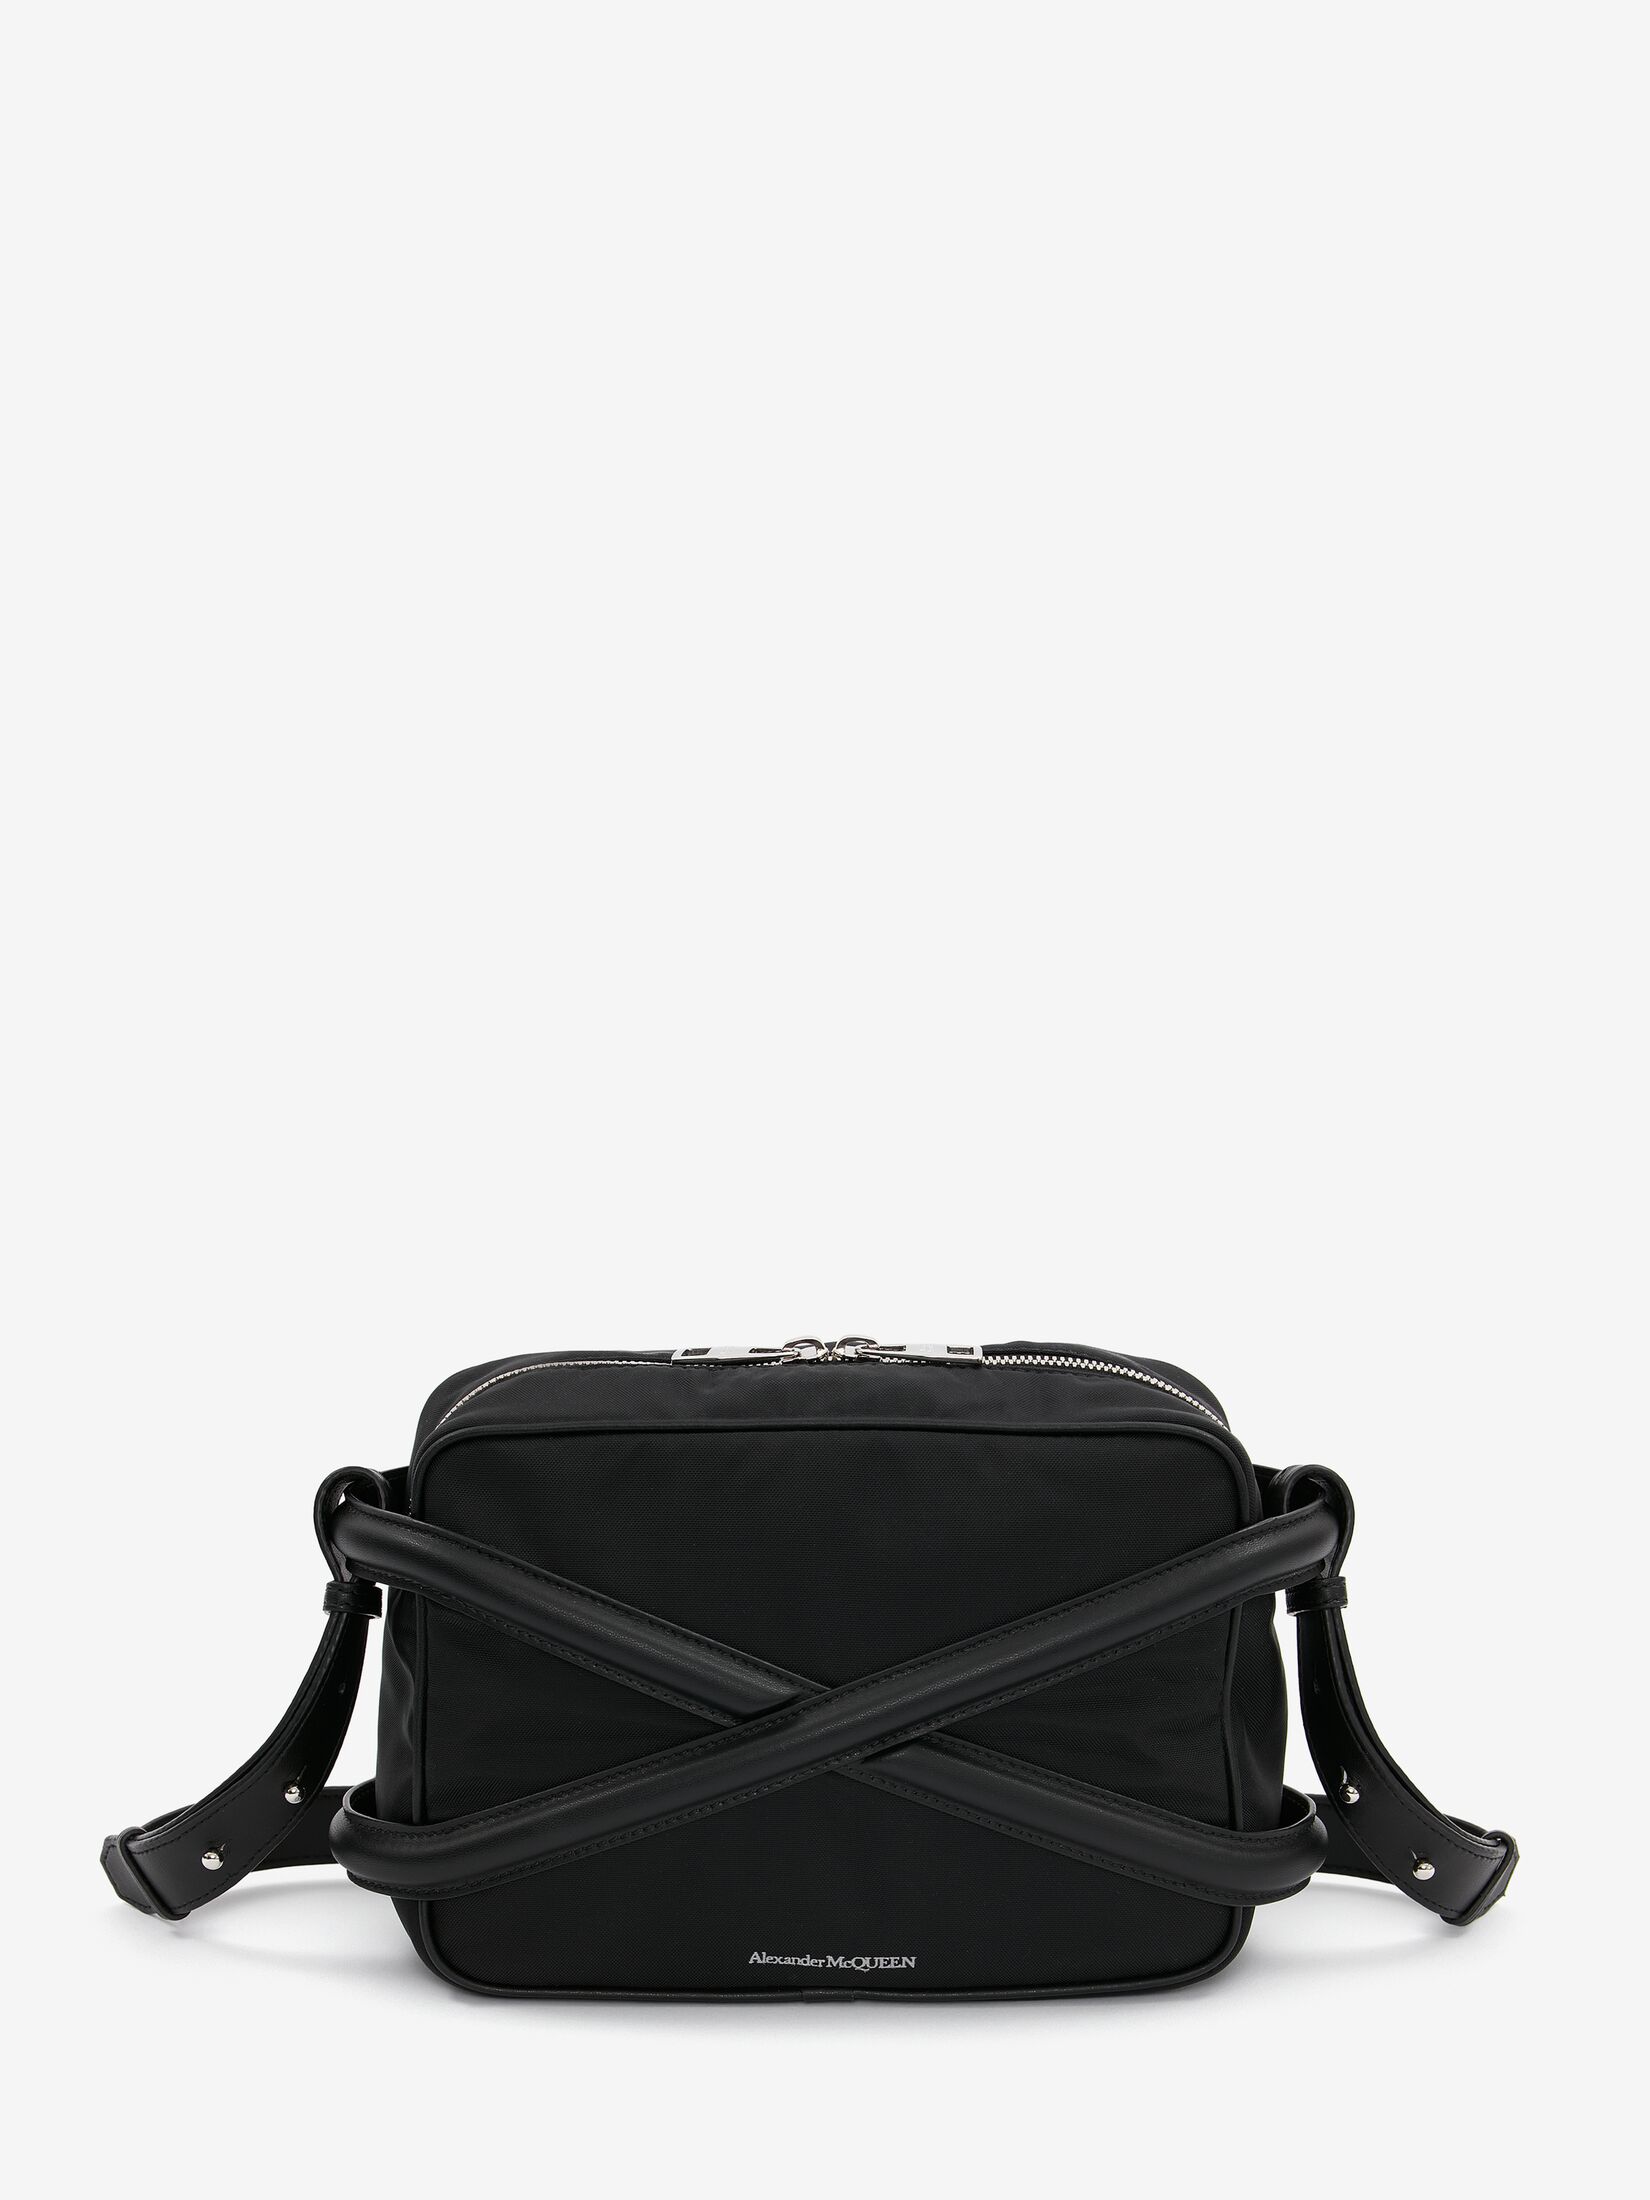 The Harness camera bag in Black | Alexander McQueen GB